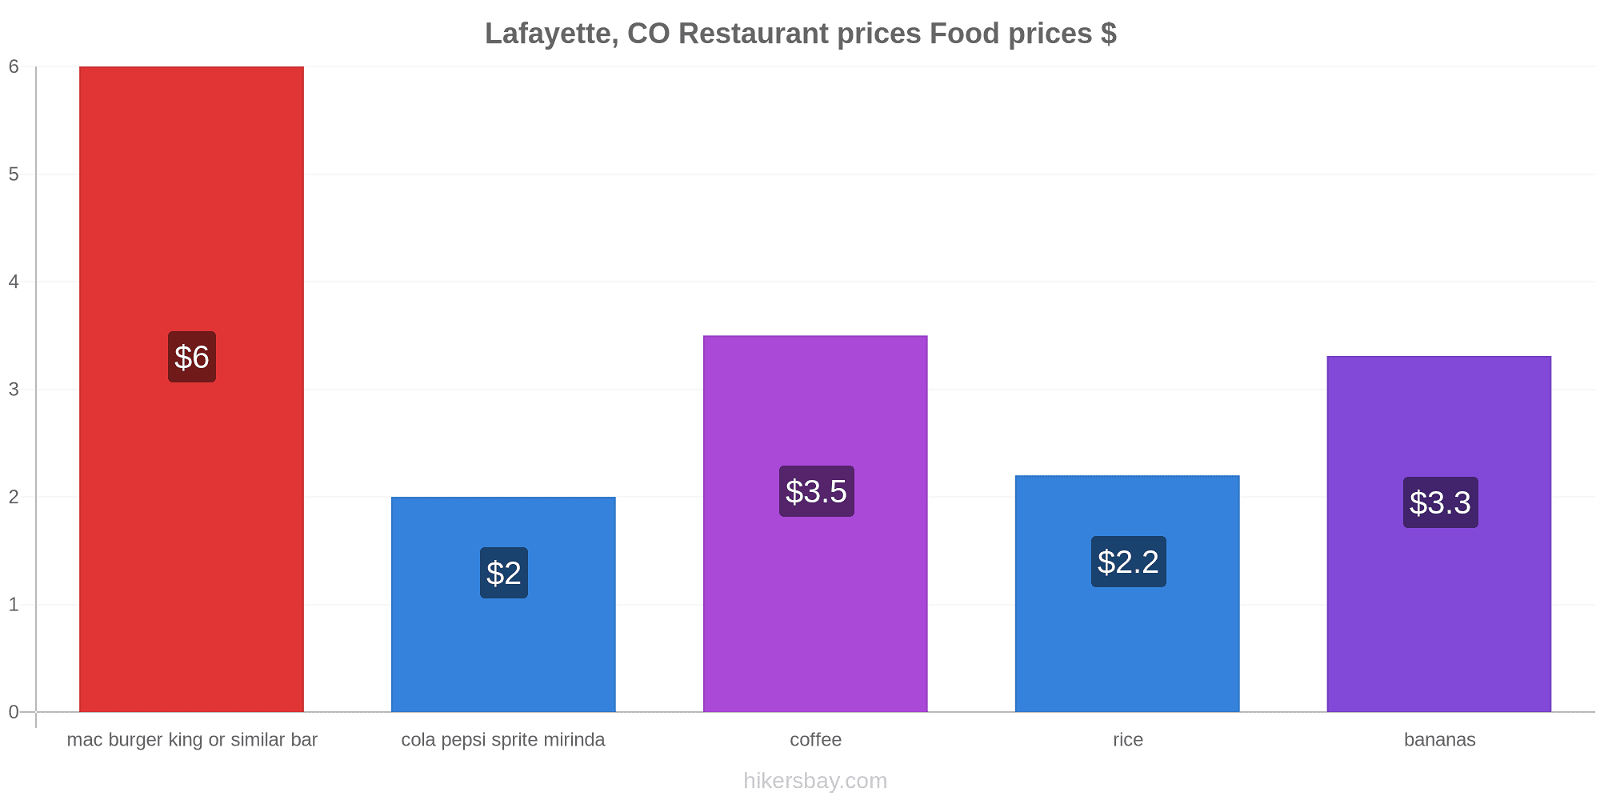 Lafayette, CO price changes hikersbay.com